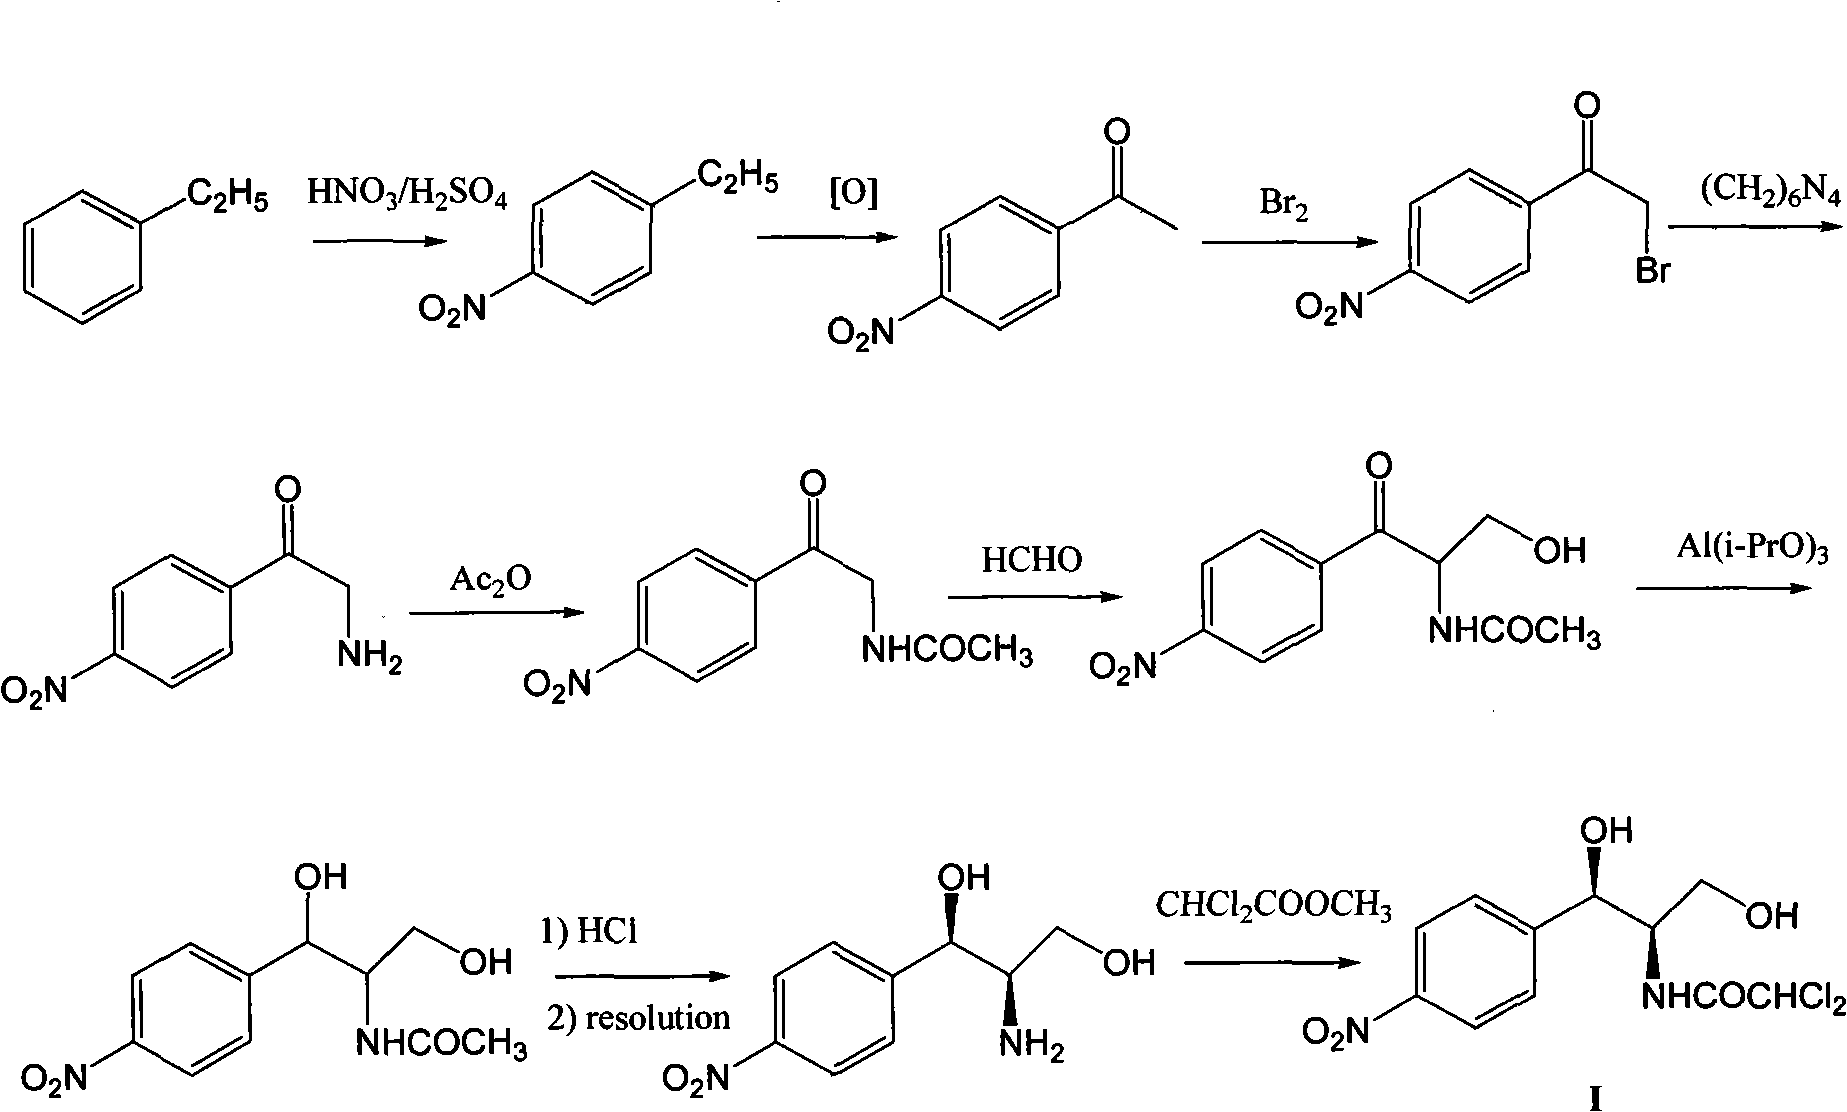 Method for synthesizing chloramphenicol from nitromethane